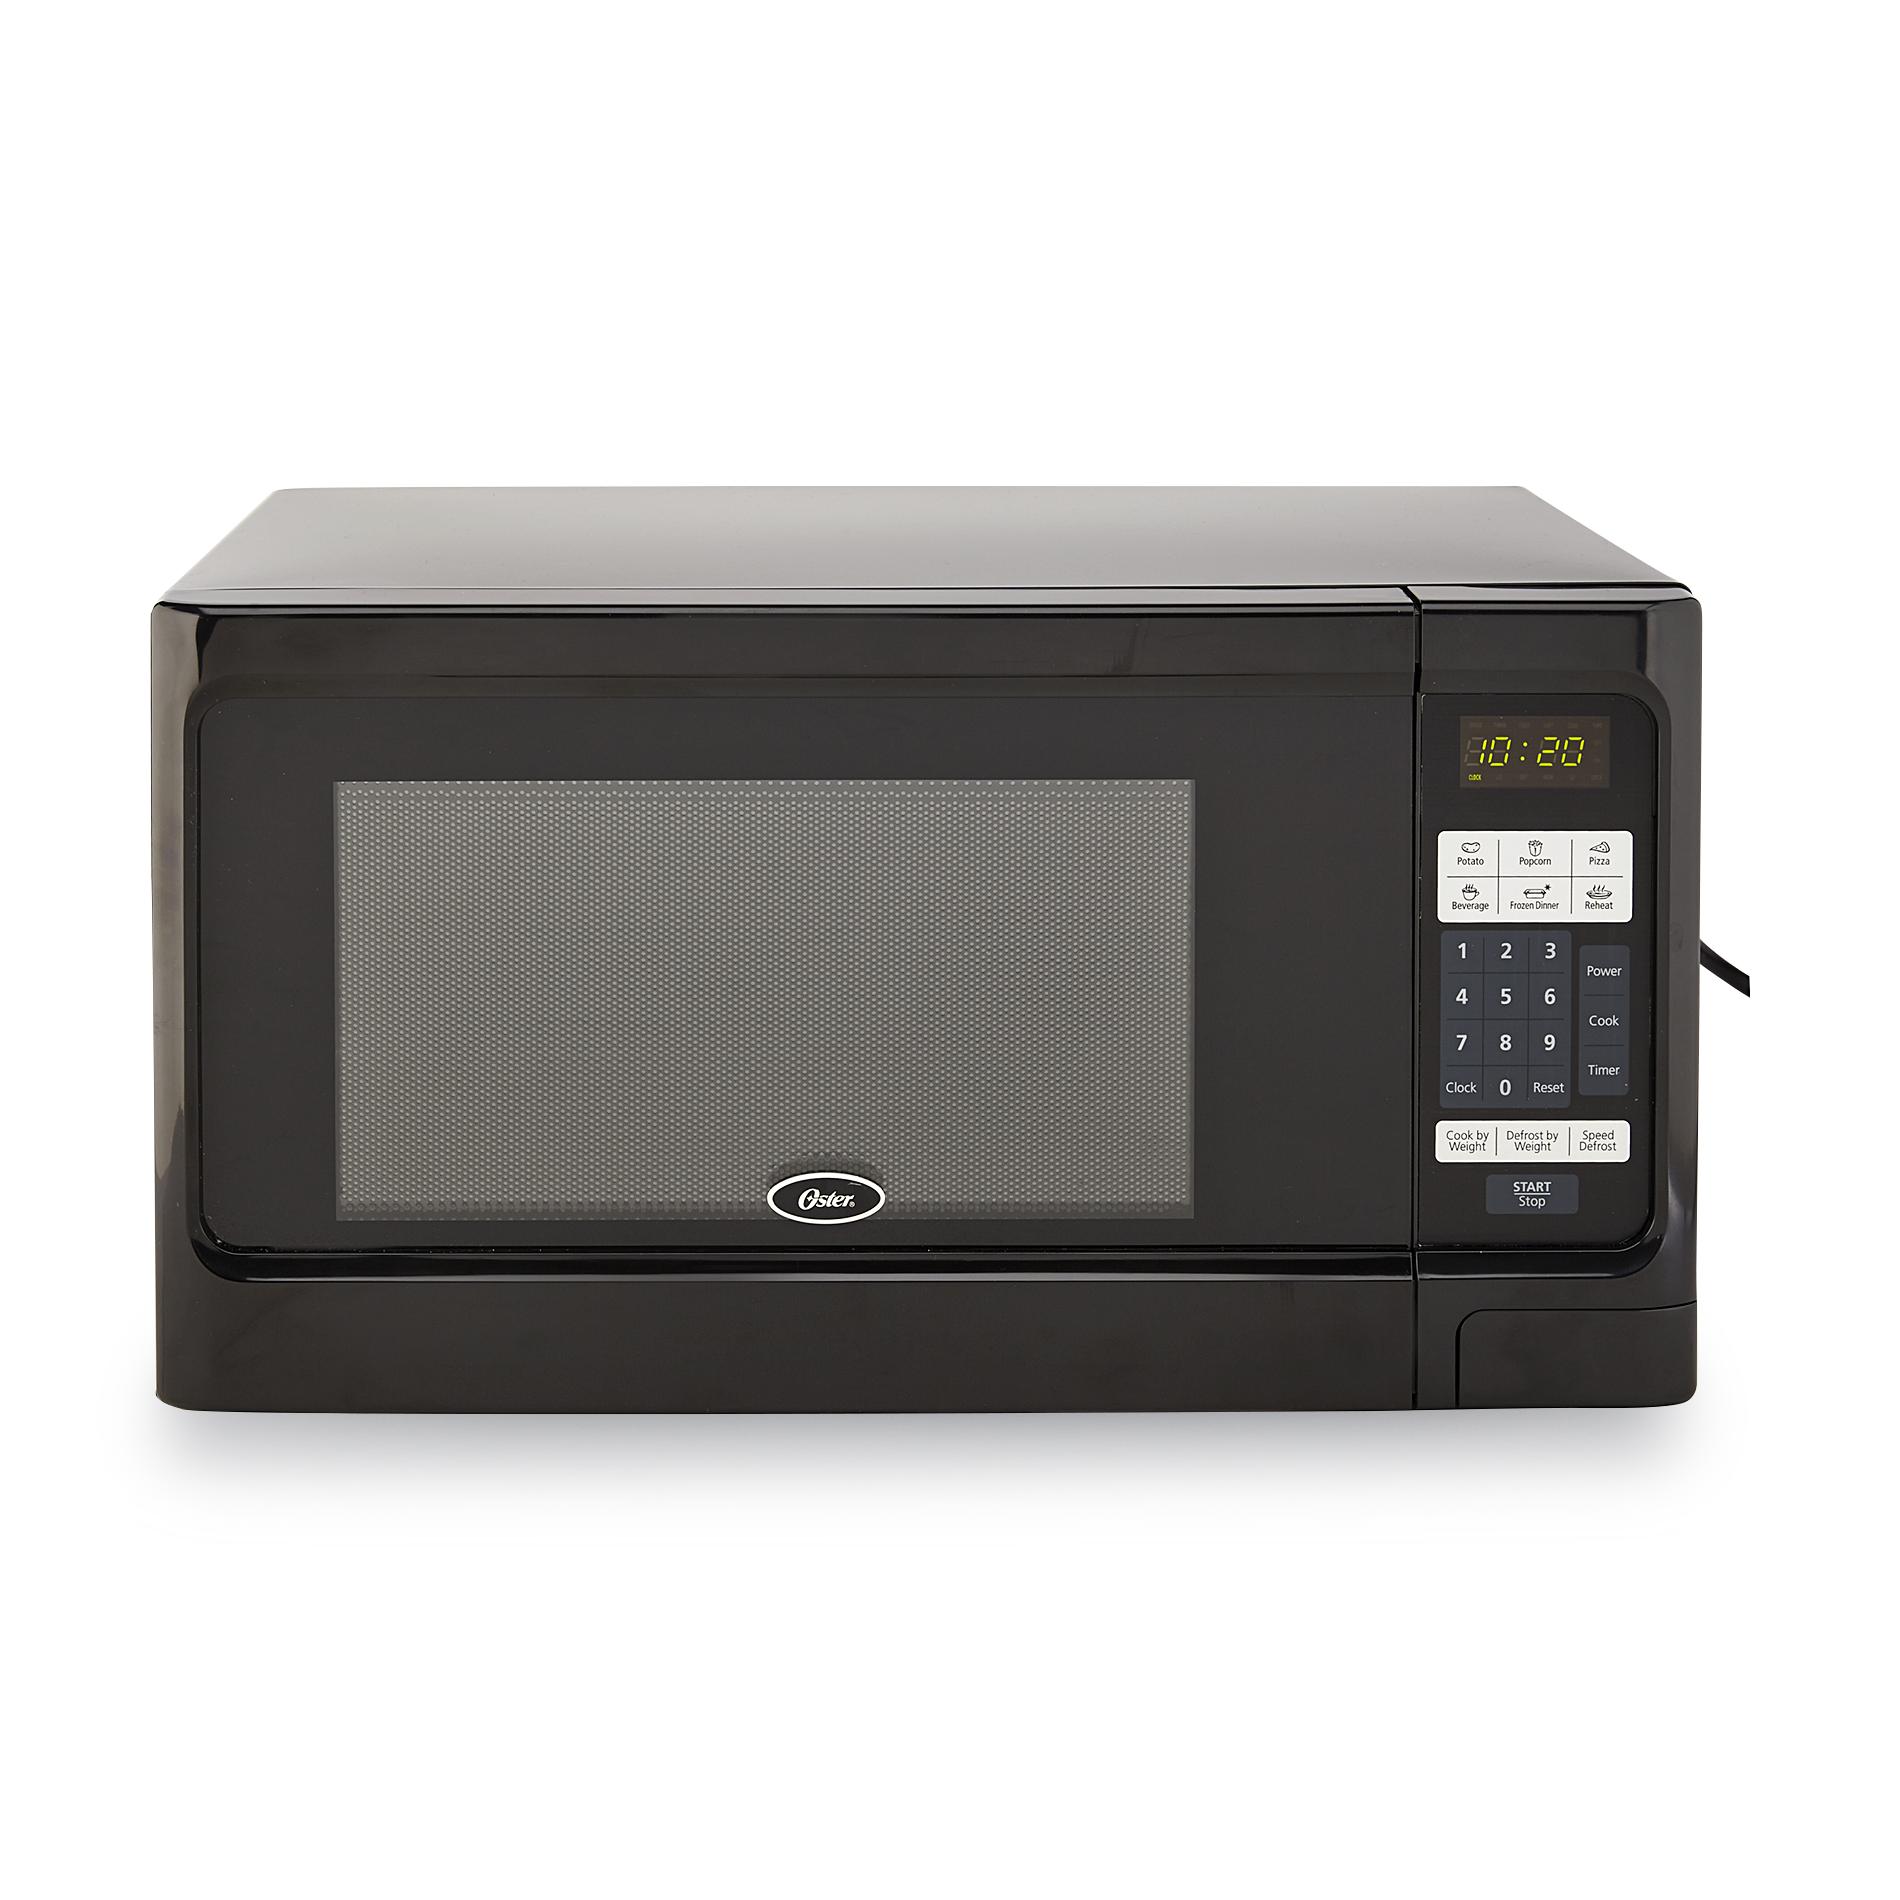 Oster OGS31102 1.1 cu. ft. Digital Countertop Microwave Oven - Black